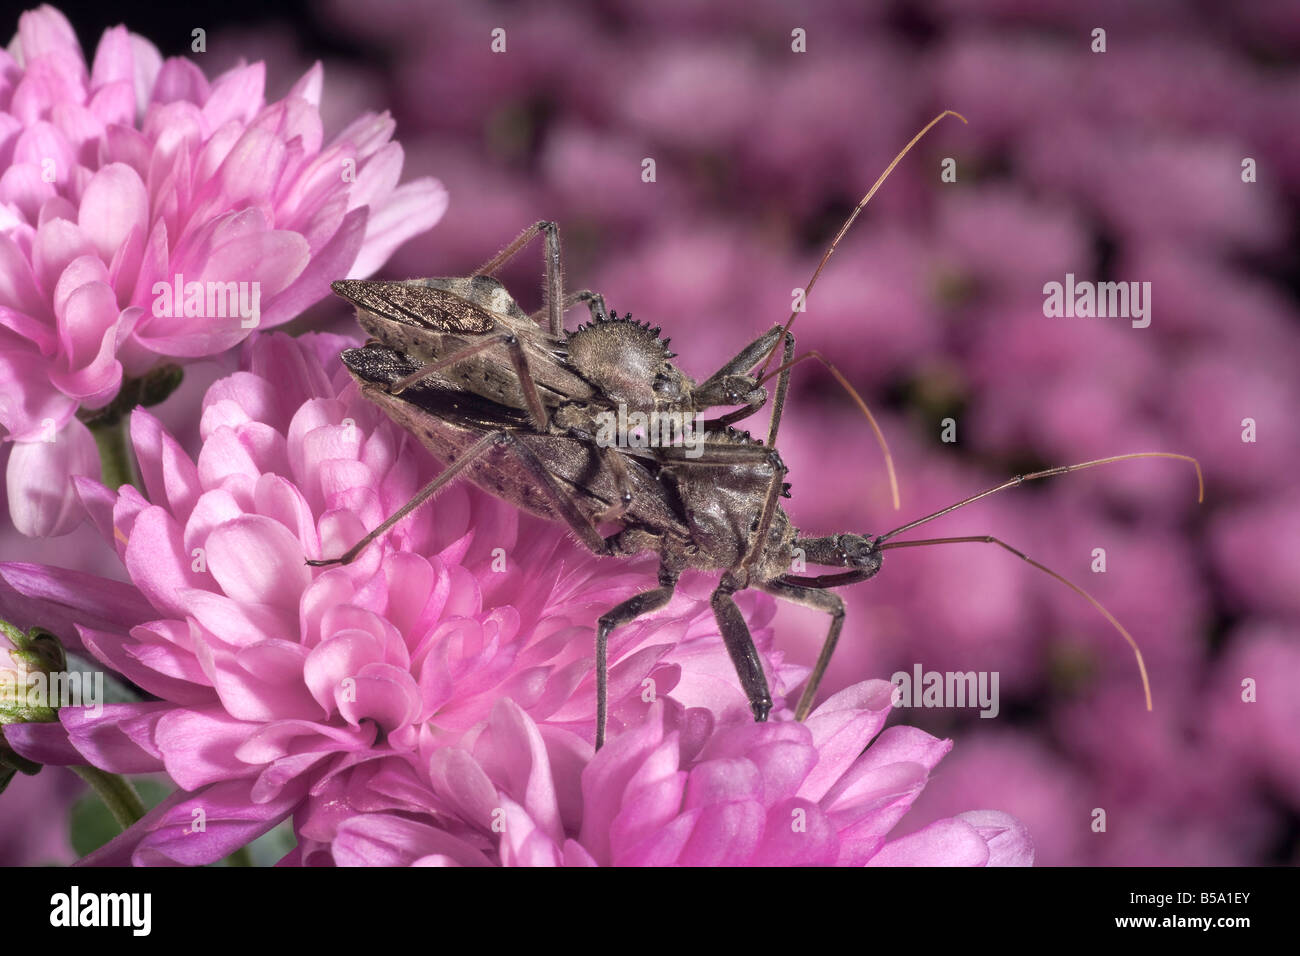 Mating Wheel Bugs also Assassin Bug Arilus cristatus Stock Photo